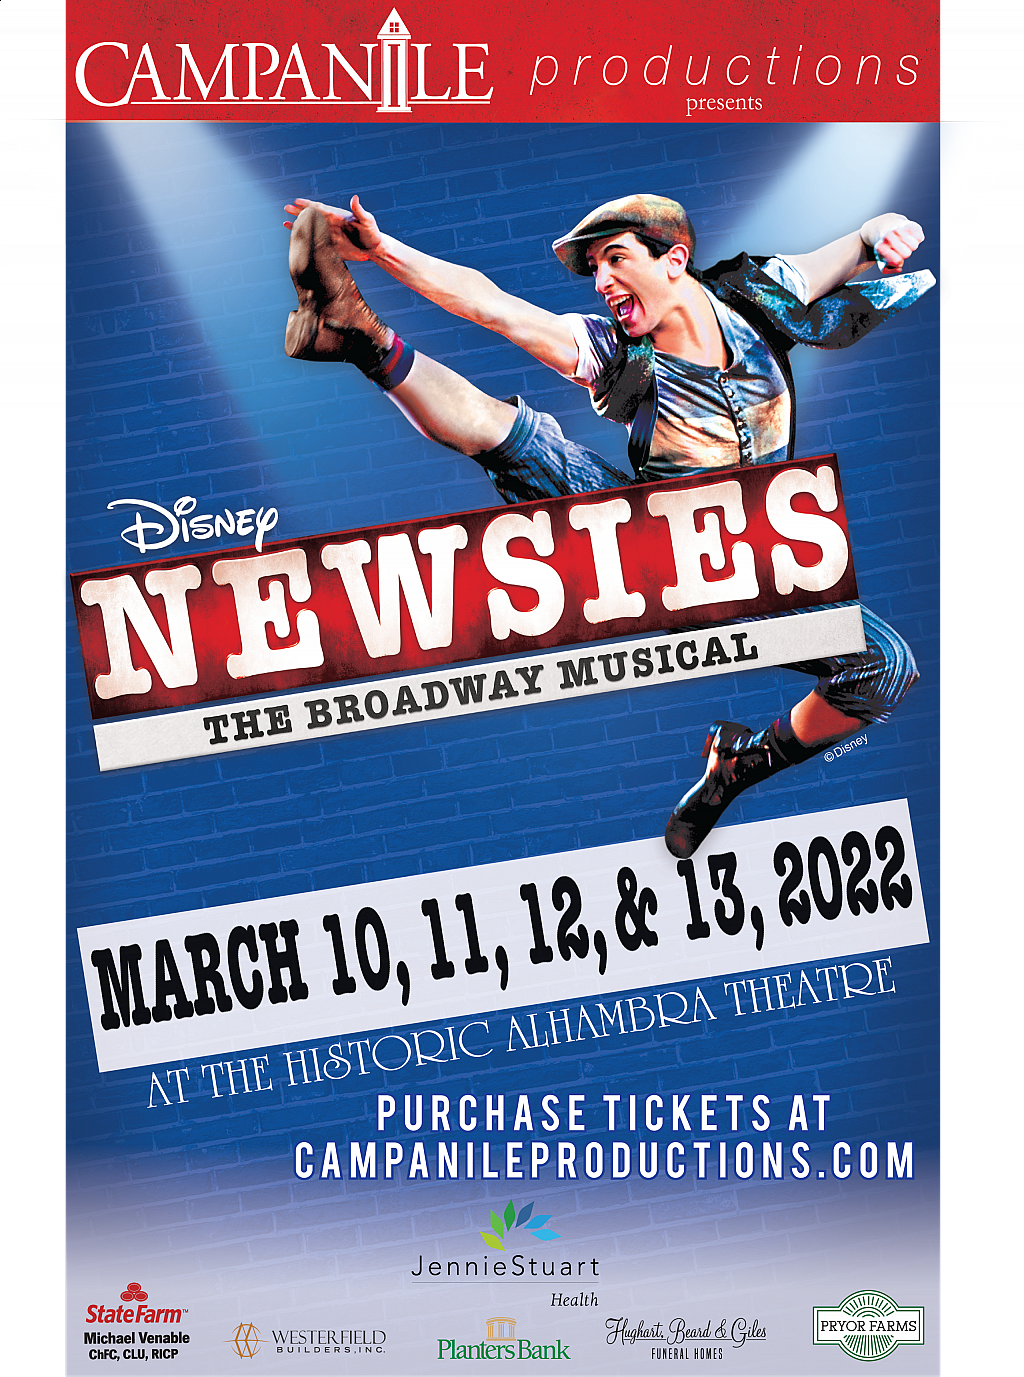 Newsies The Broadway Musical